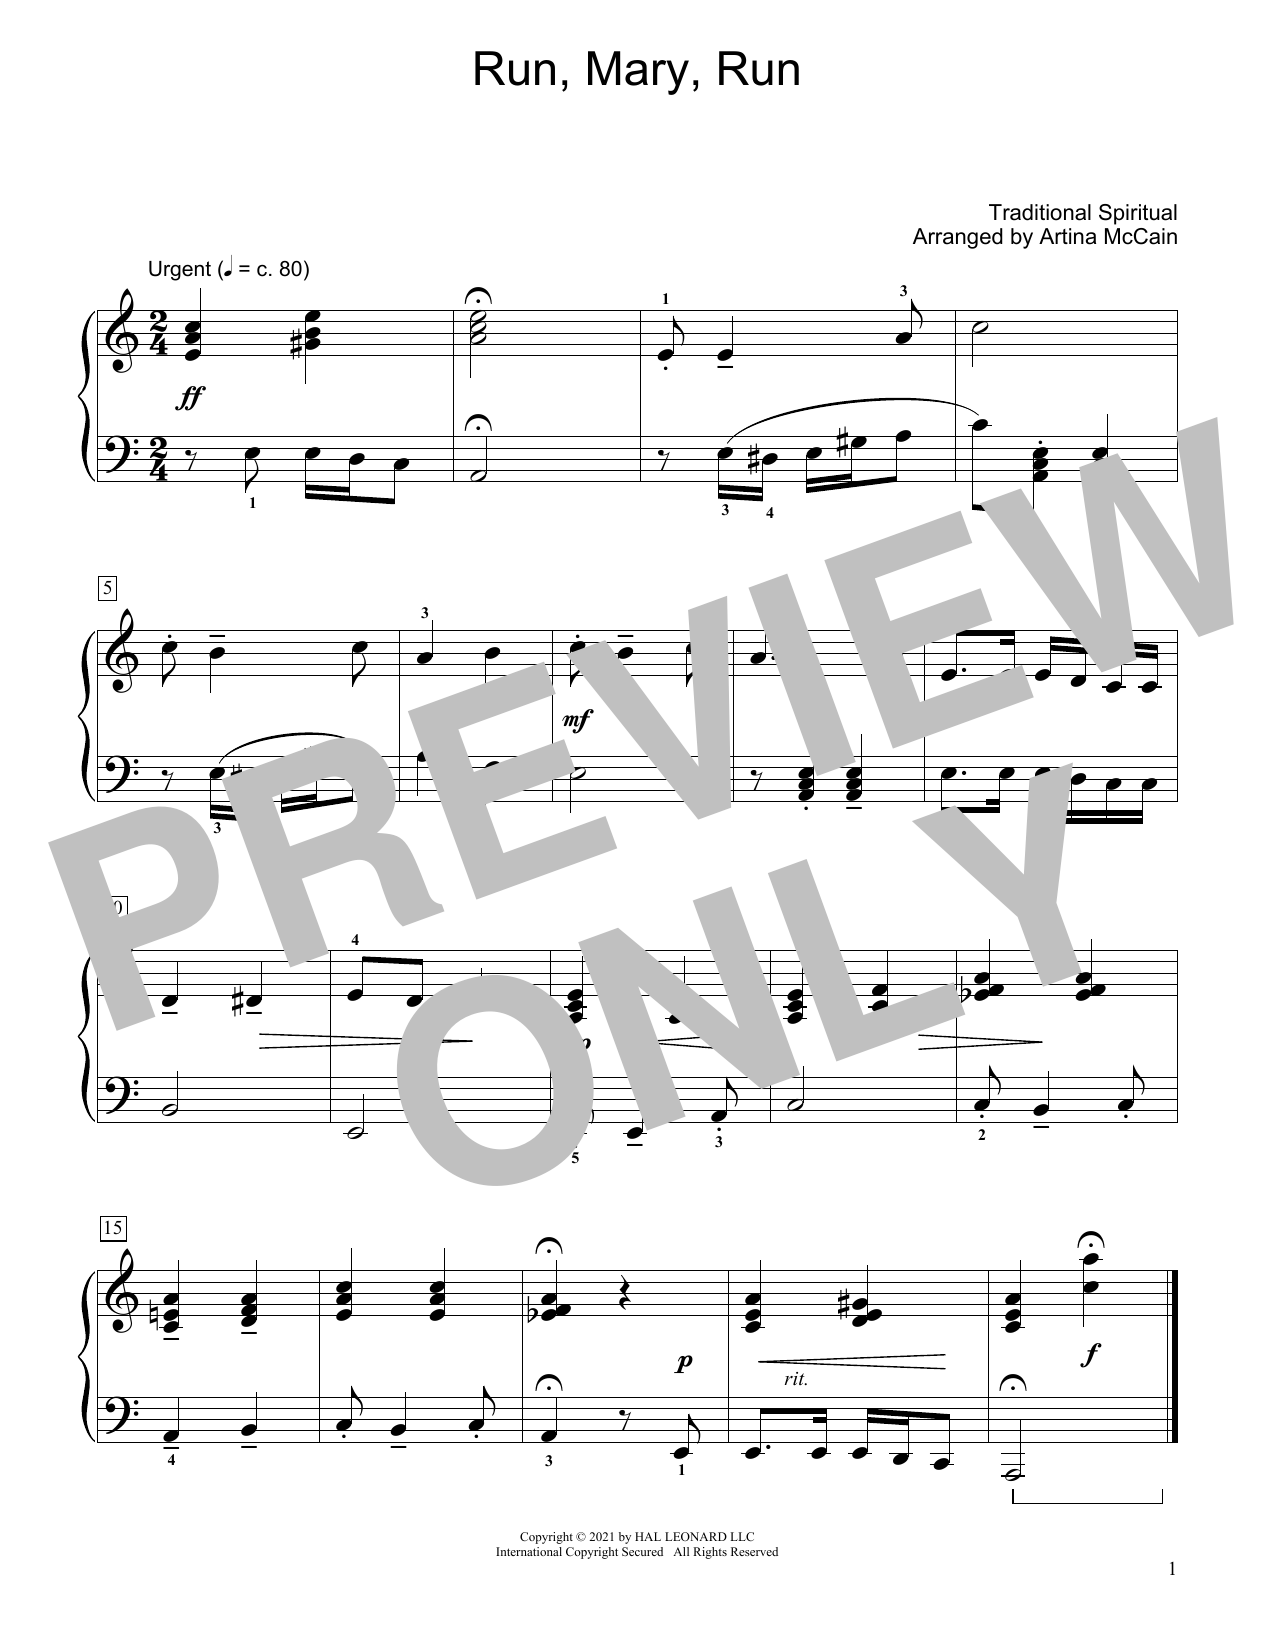 Traditional Spiritual Run, Mary, Run (arr. Artina McCain) Sheet Music Notes & Chords for Educational Piano - Download or Print PDF